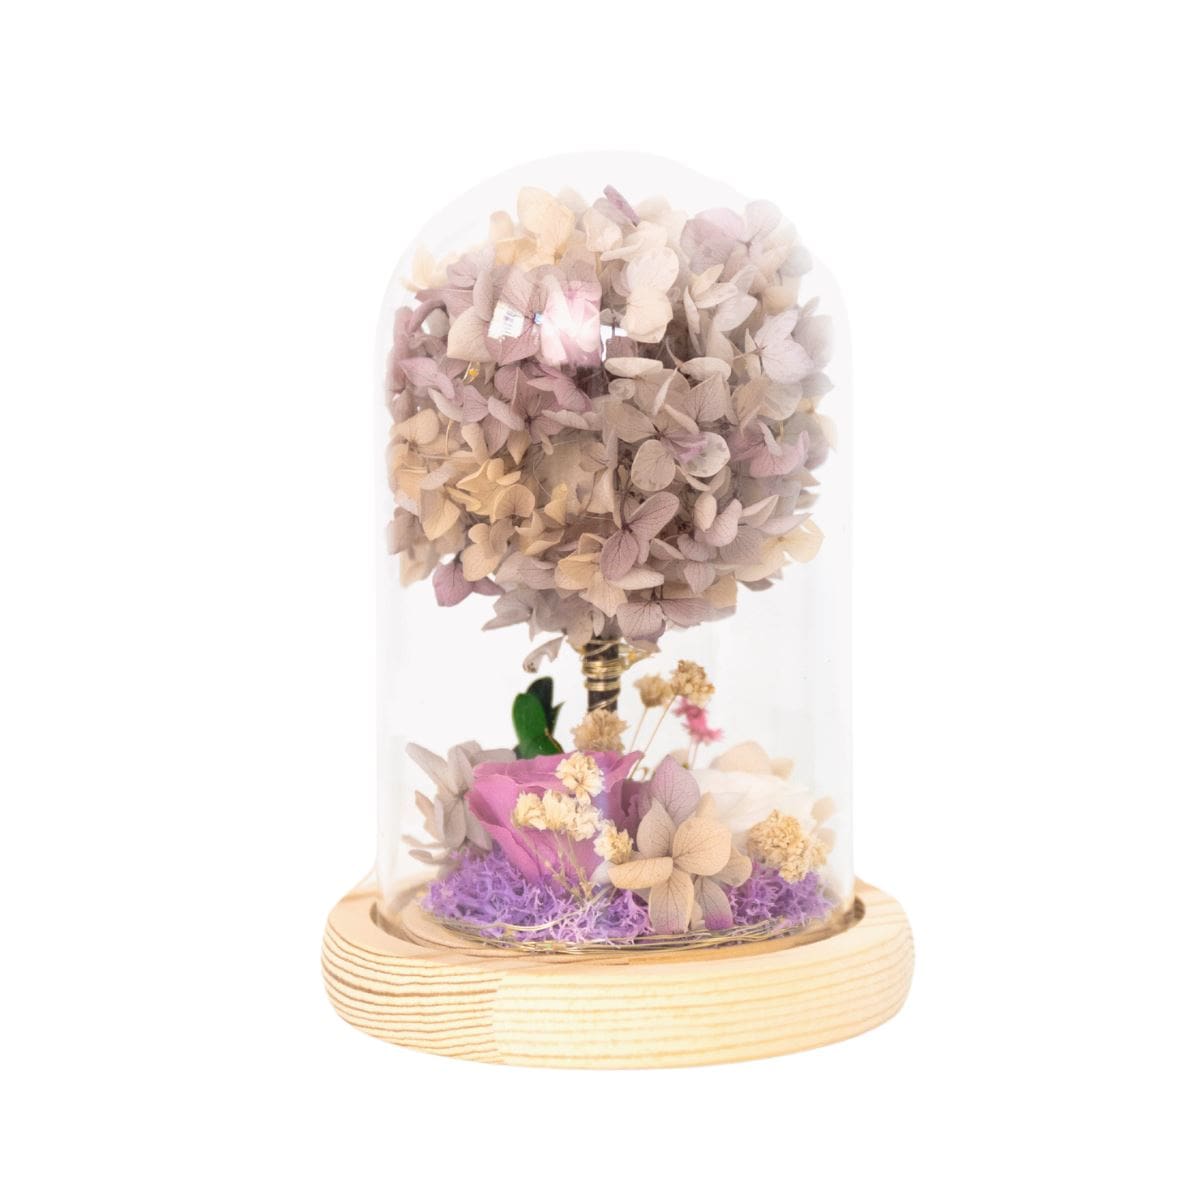 Hydarium Dome - Flower - Lilac あじさい - Preserved Flowers & Fresh Flower Florist Gift Store